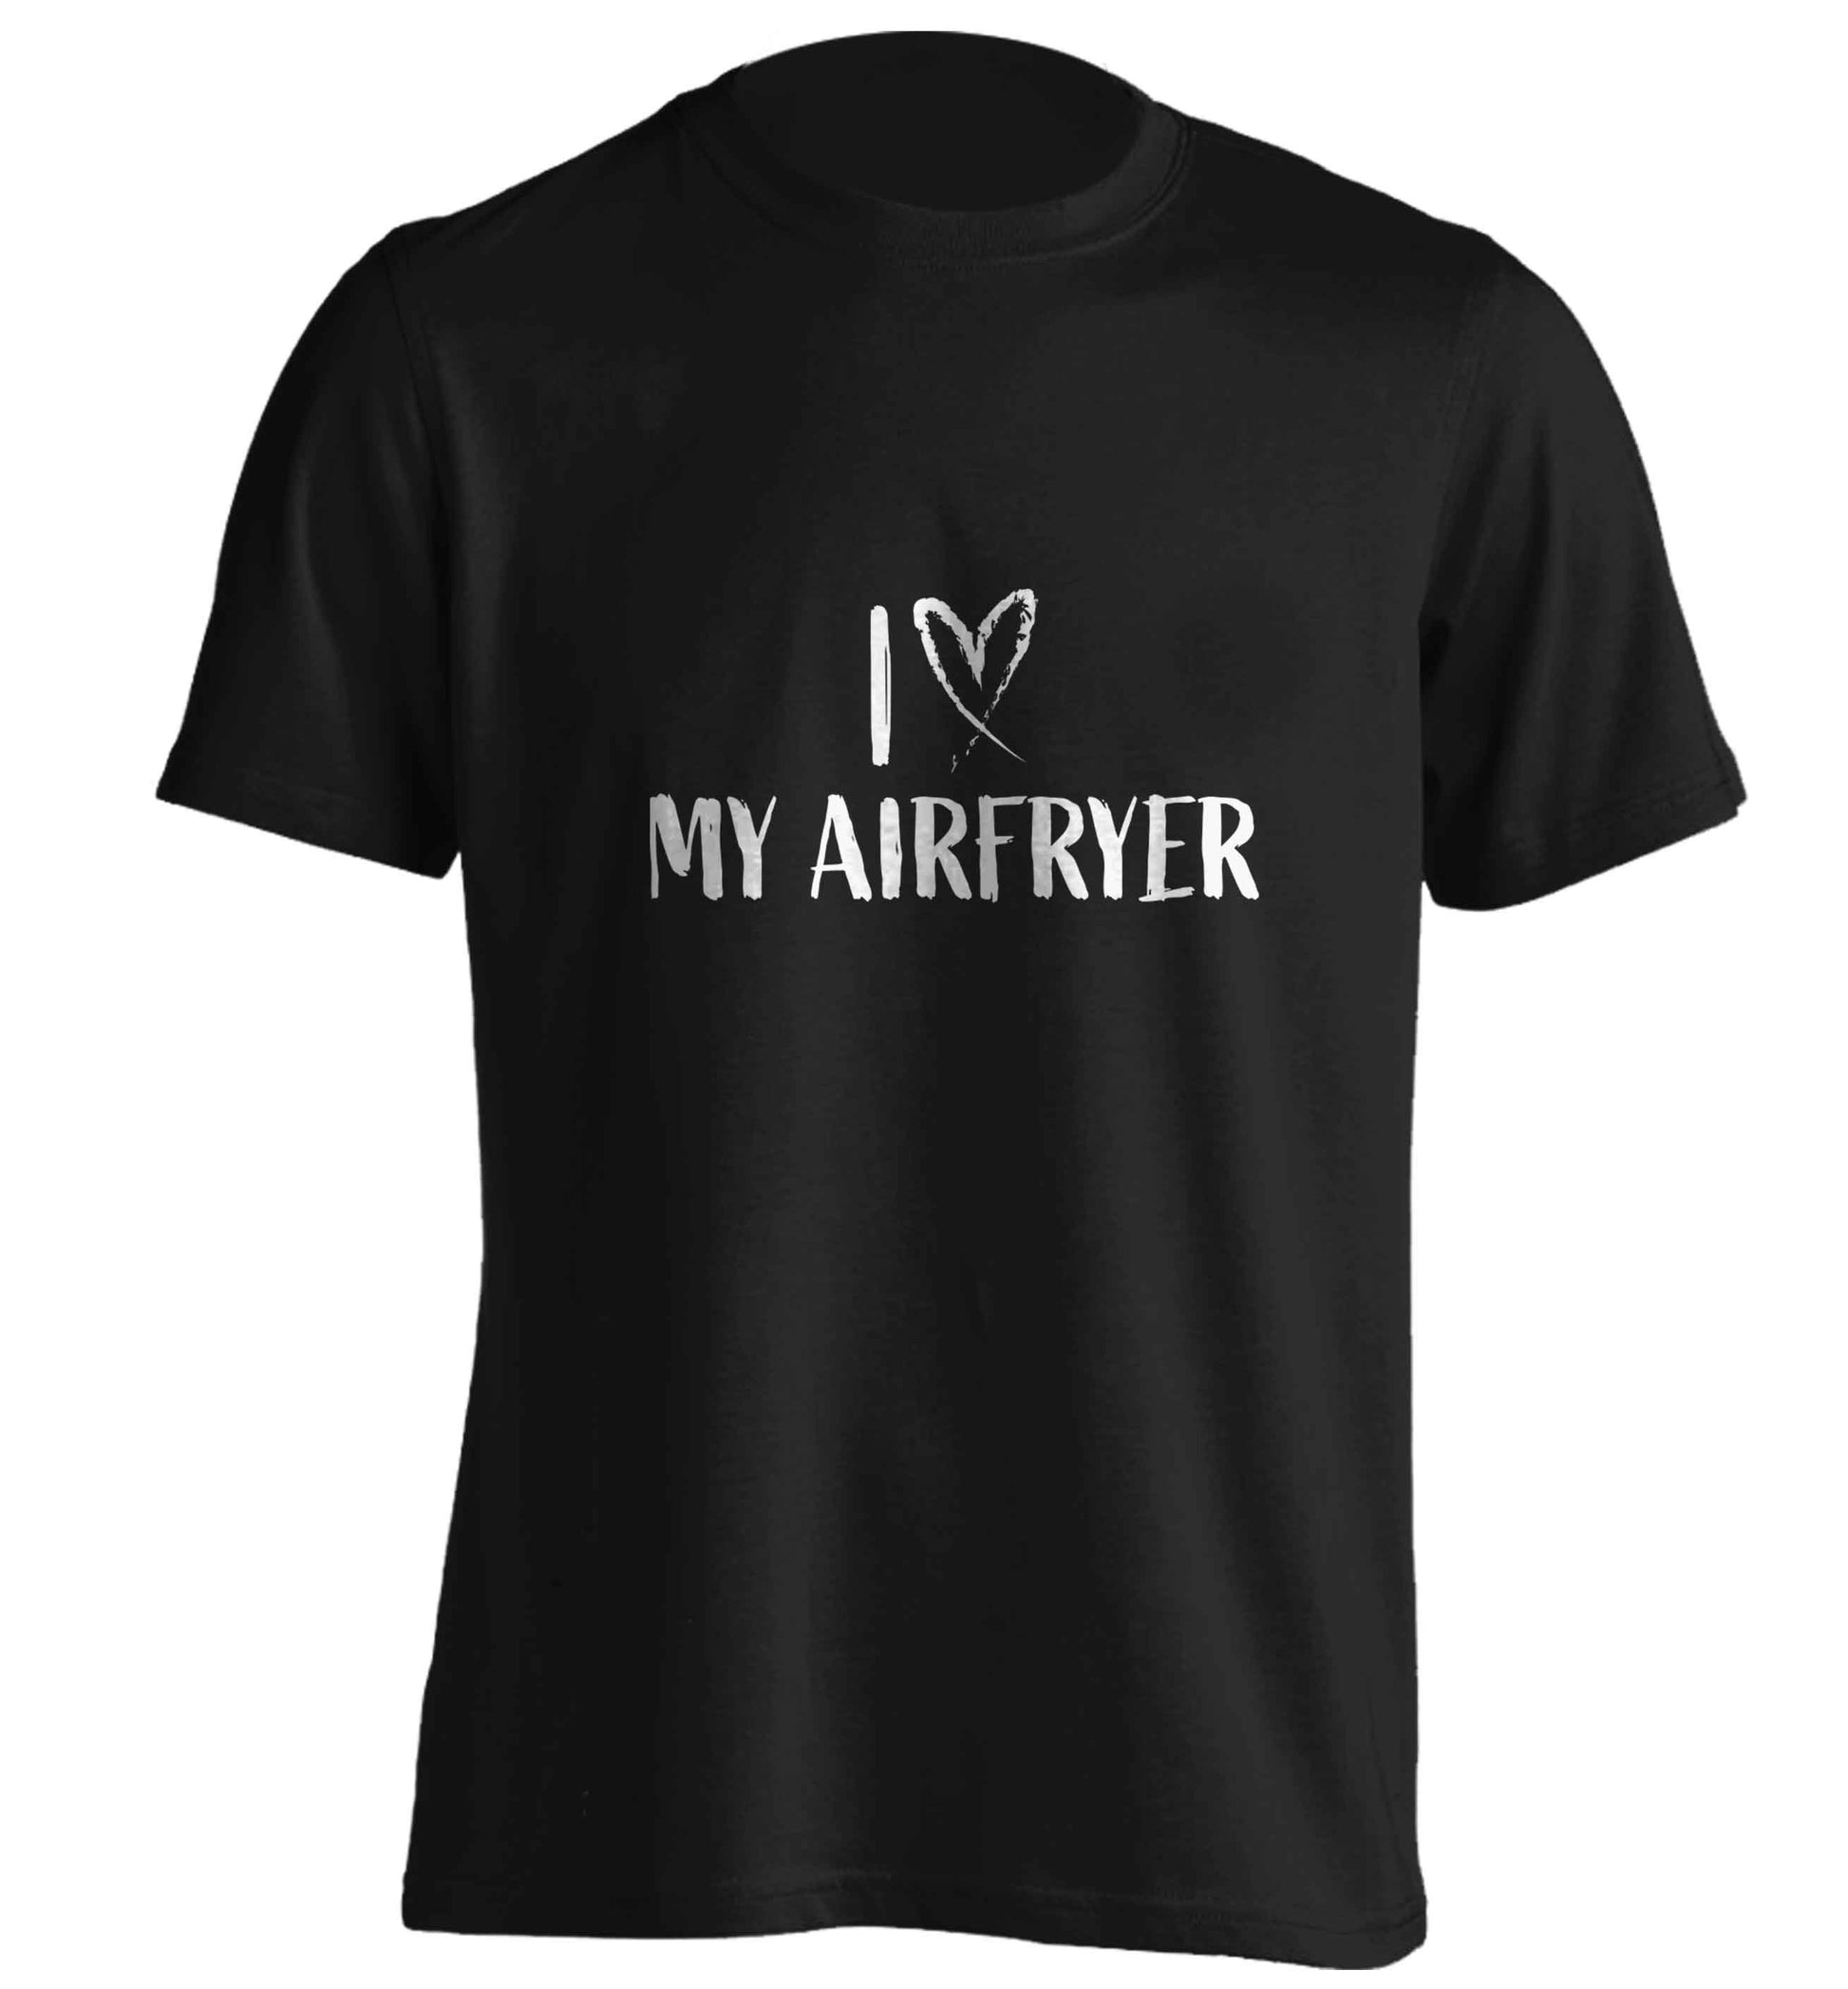 I love my airfryeradults unisex black Tshirt 2XL